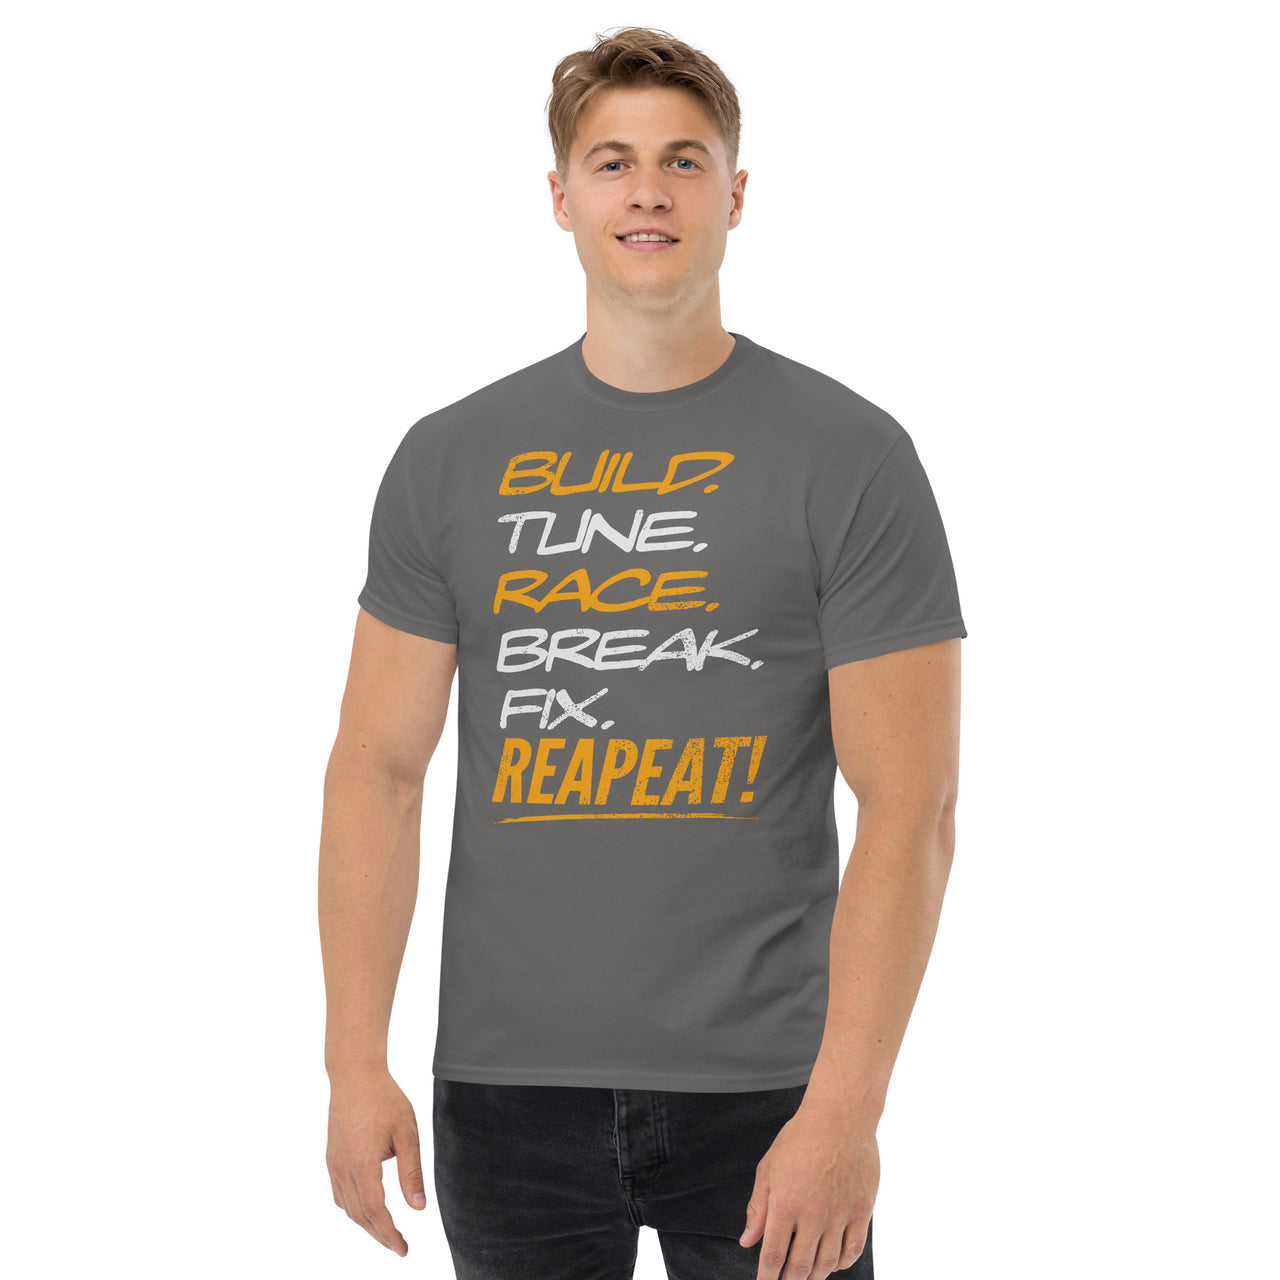 Drag Racing T-Shirt, Car Enthusiasts Tee, Racer / Racecar Lover T-Shirt modeled in grey